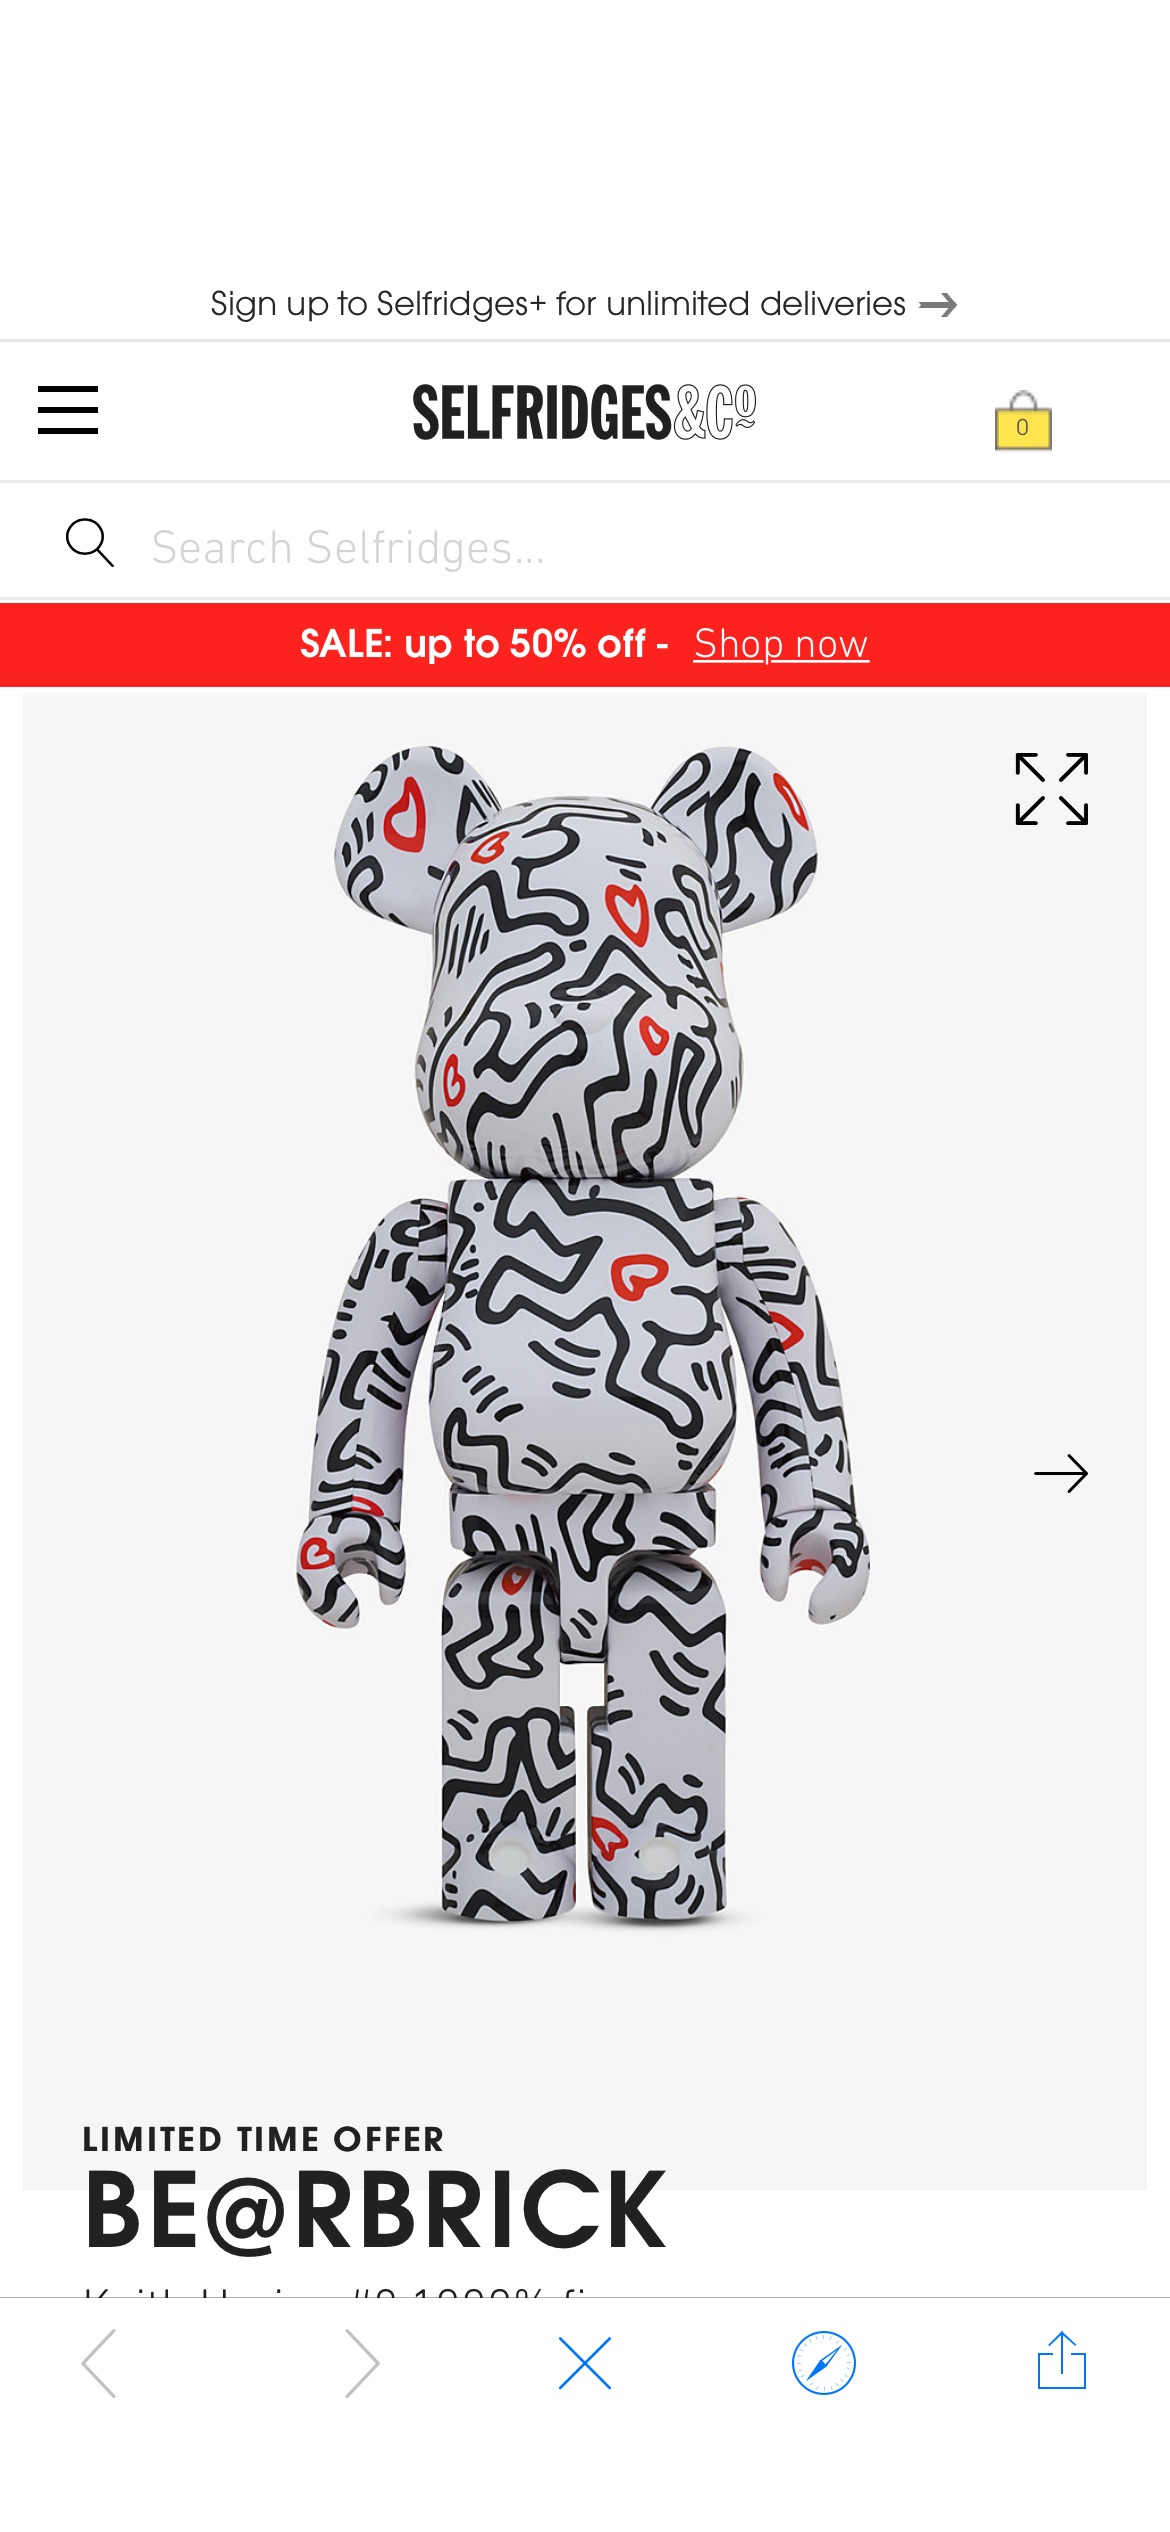 BE@RBRICK - Keith Haring #8 1000% figure | Selfridges.com 
8折收BearBrick x Keith Haring凯斯哈林